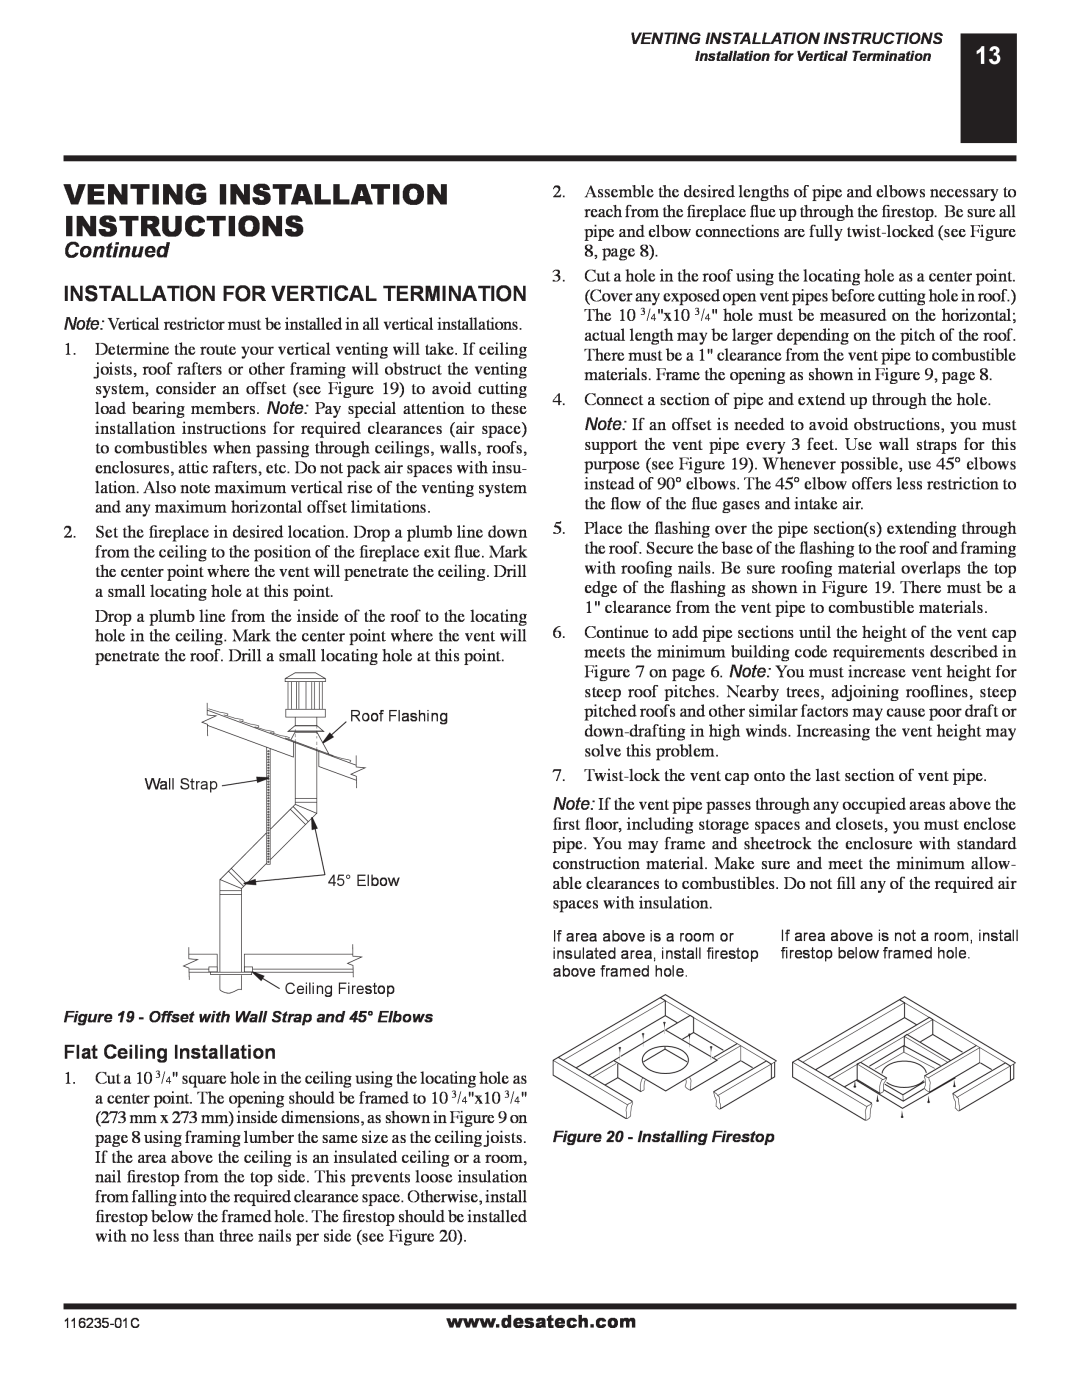 Desa (V)VC36PE, (V)VC36NE Venting Installation Instructions, Continued, Installation For Vertical Termination 